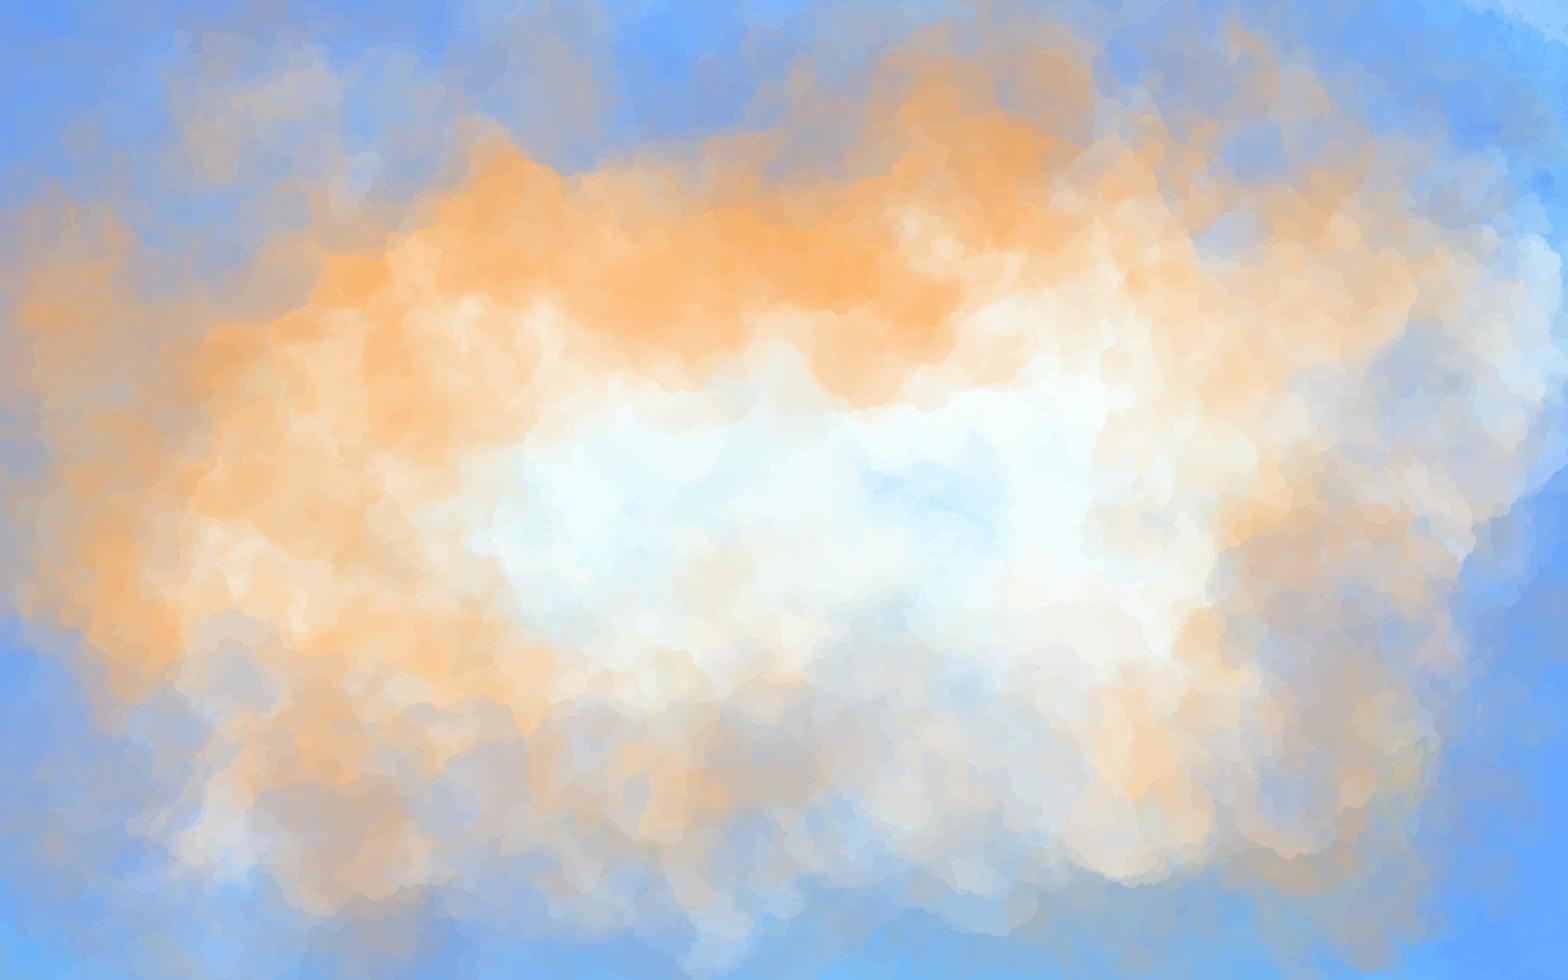 Background Watercolor Landscape, Watercolor Painting, Watercolor Sky, Watercolor Abstract, Watercolor Dreamscape. vector